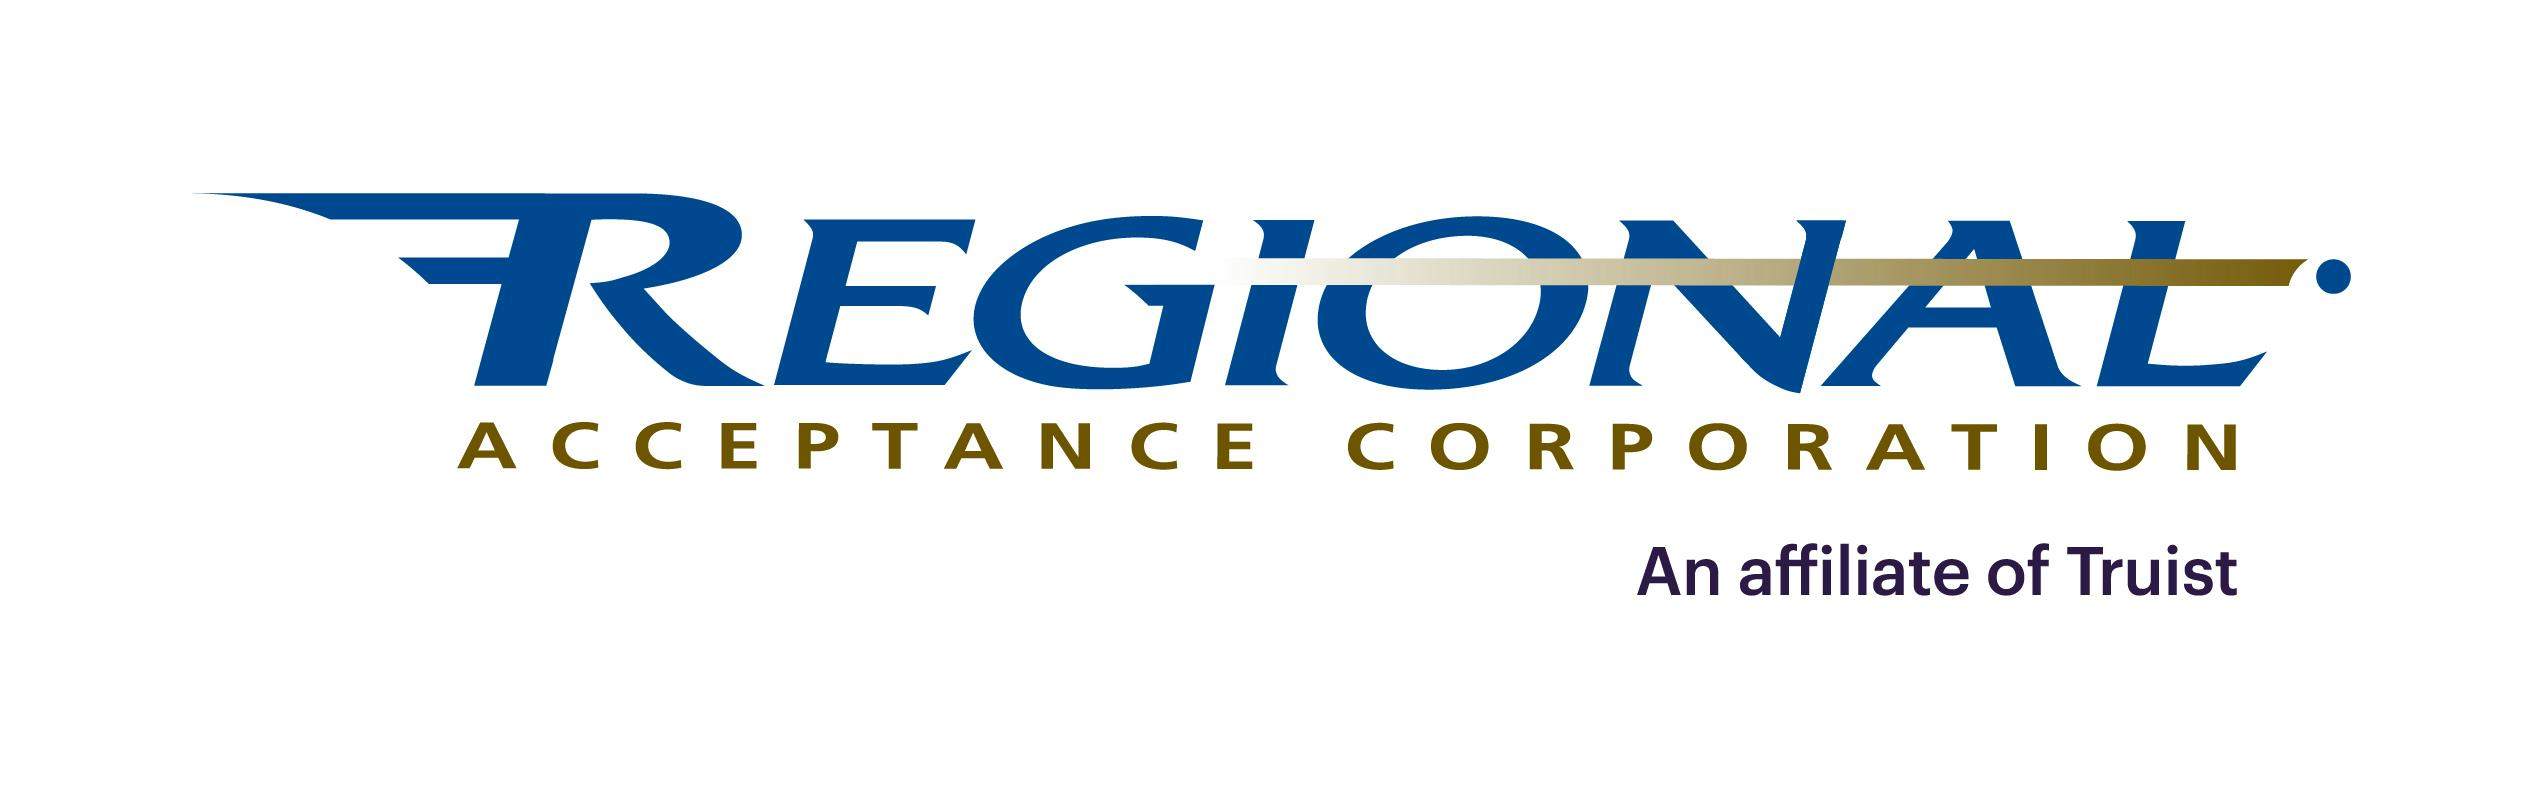 regional acceptance corporation logo